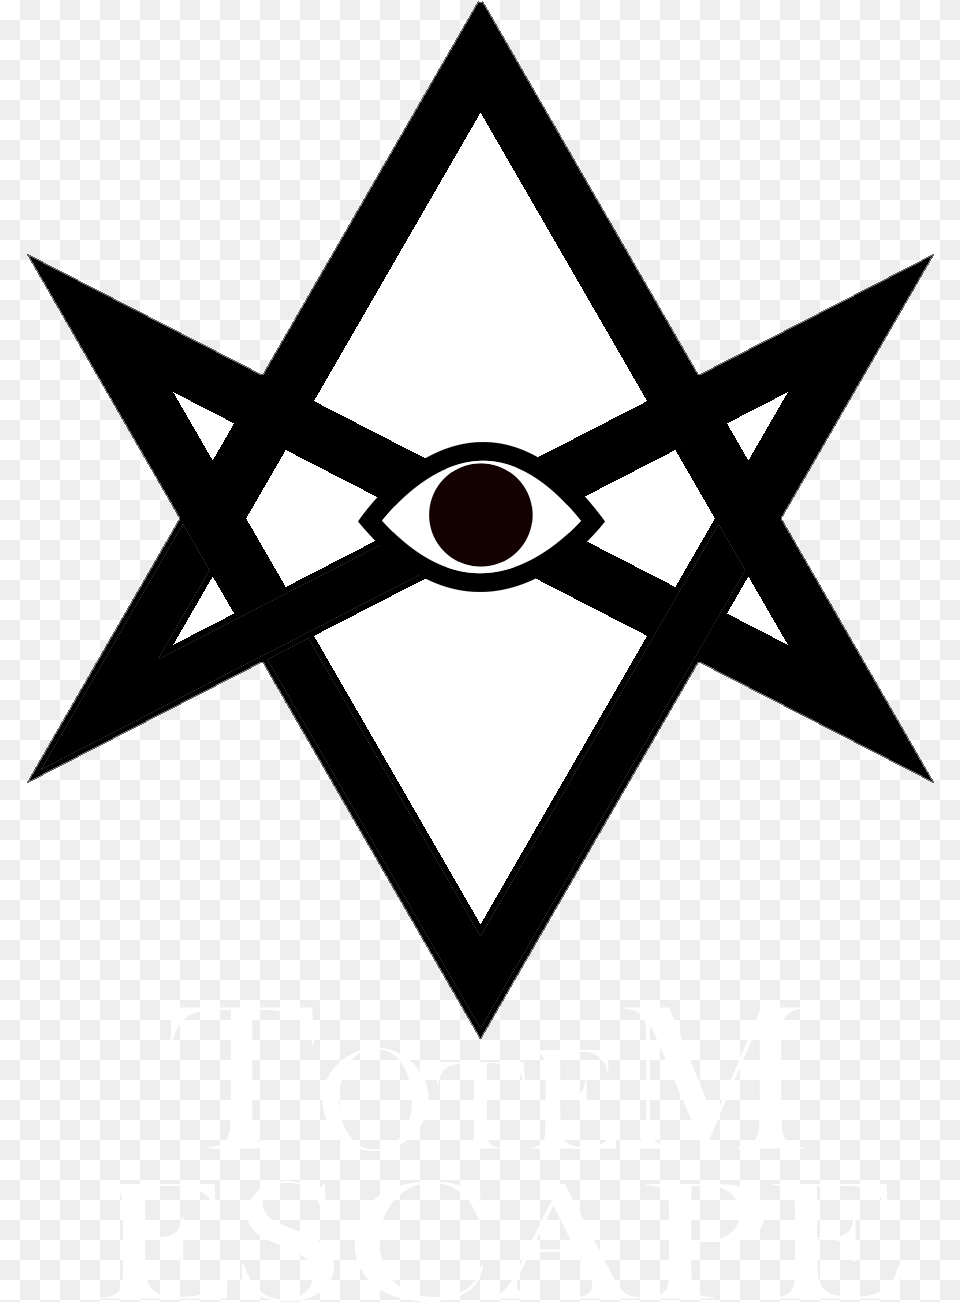 Bring Me The Horizon Logo 6 Pointed Star Tattoo, Cross, Symbol Png Image